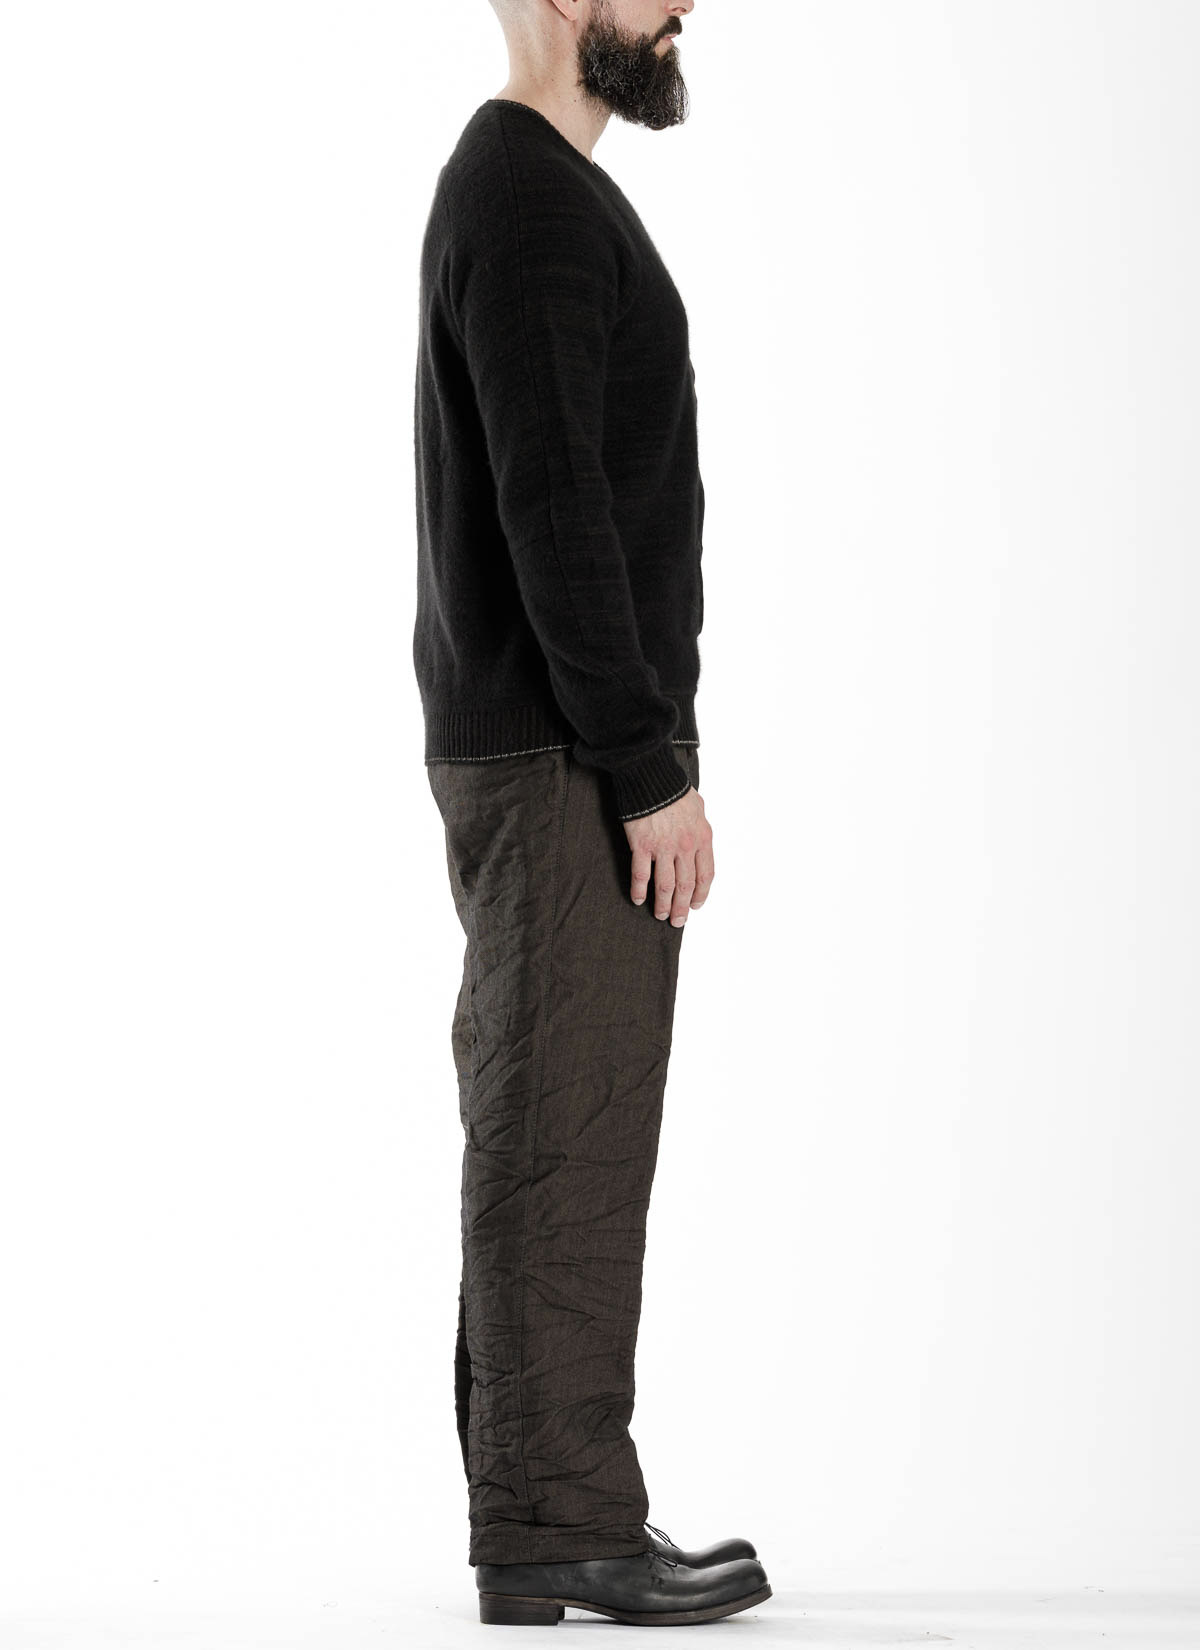 hide-m | TAICHI MURAKAMI Pocket Sweater, black cashmere